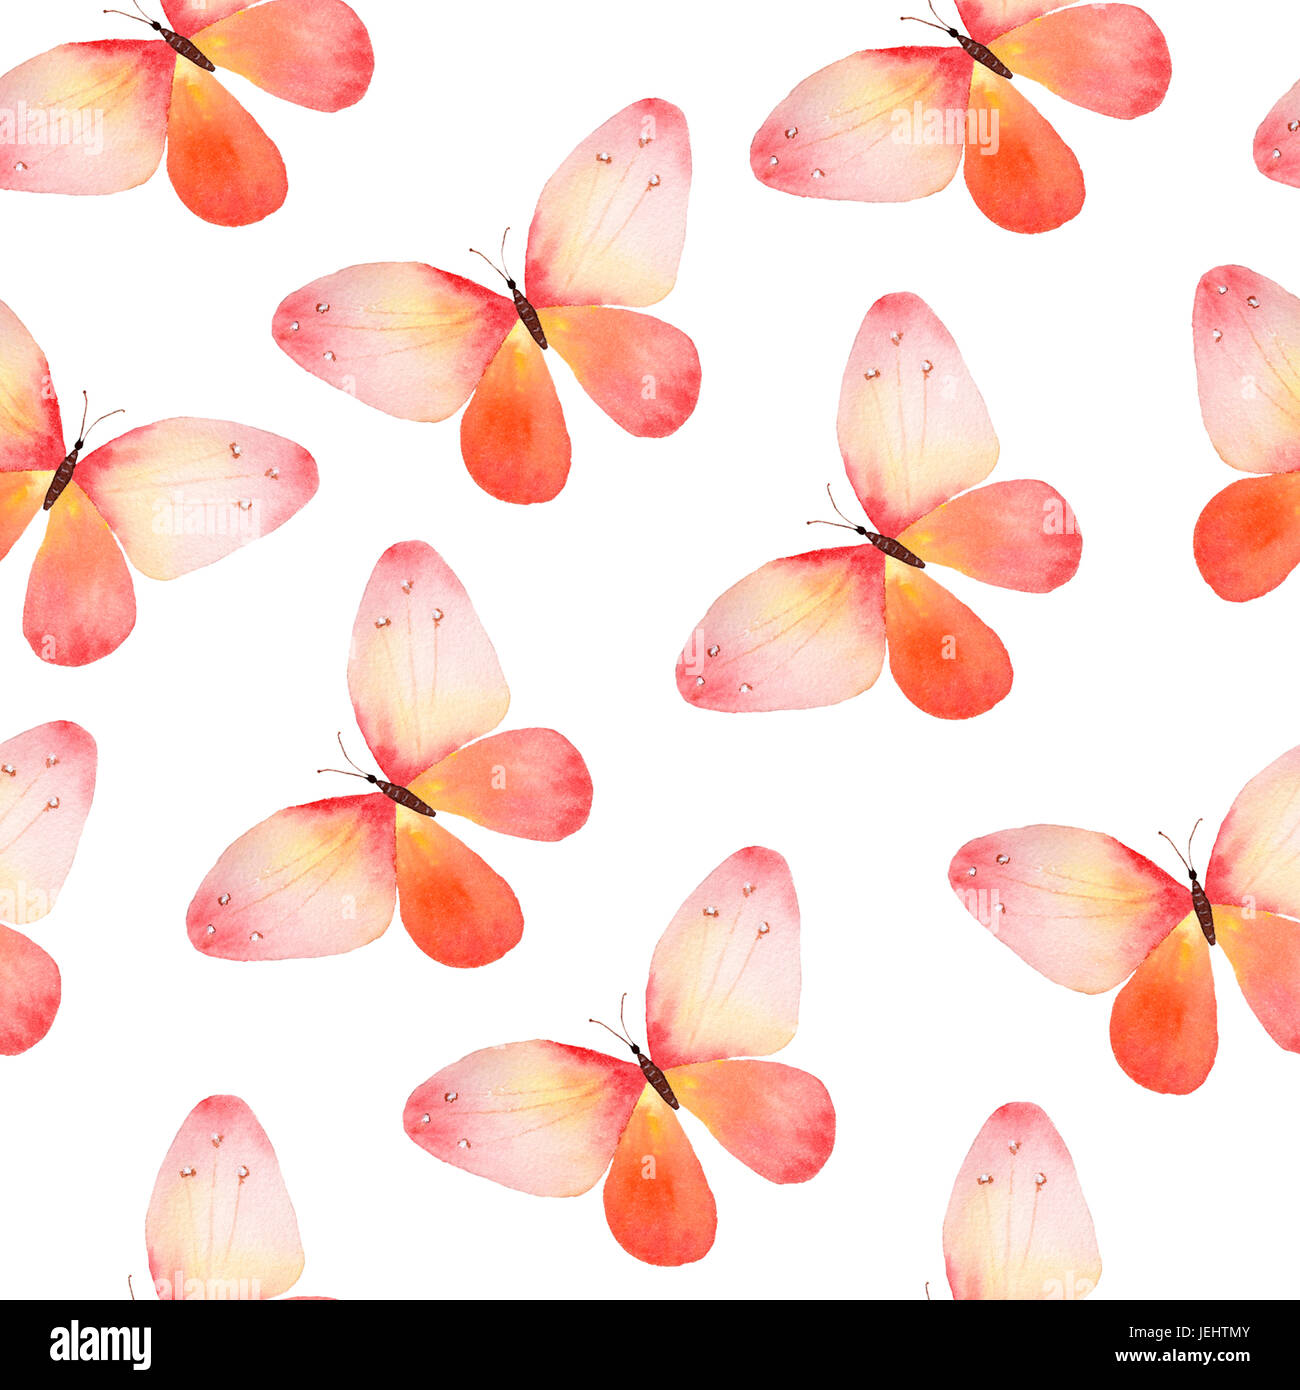 orange butterflies wallpaper